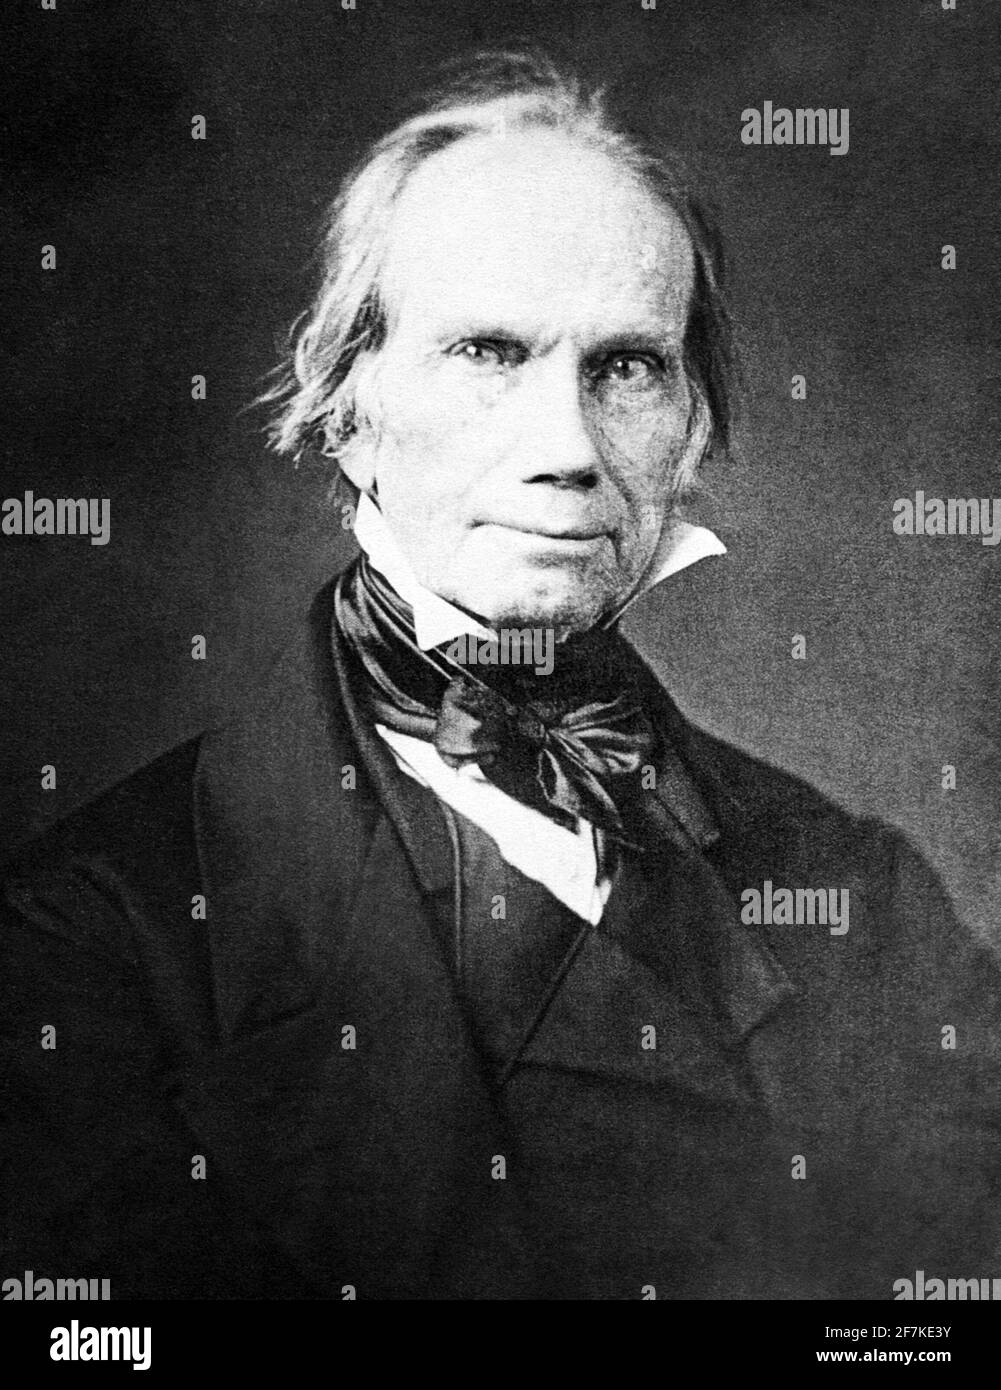 Vintage-Portraitfoto des amerikanischen Staatsmannes Henry Clay (1777 – 1852). Foto ca. 1848. Stockfoto